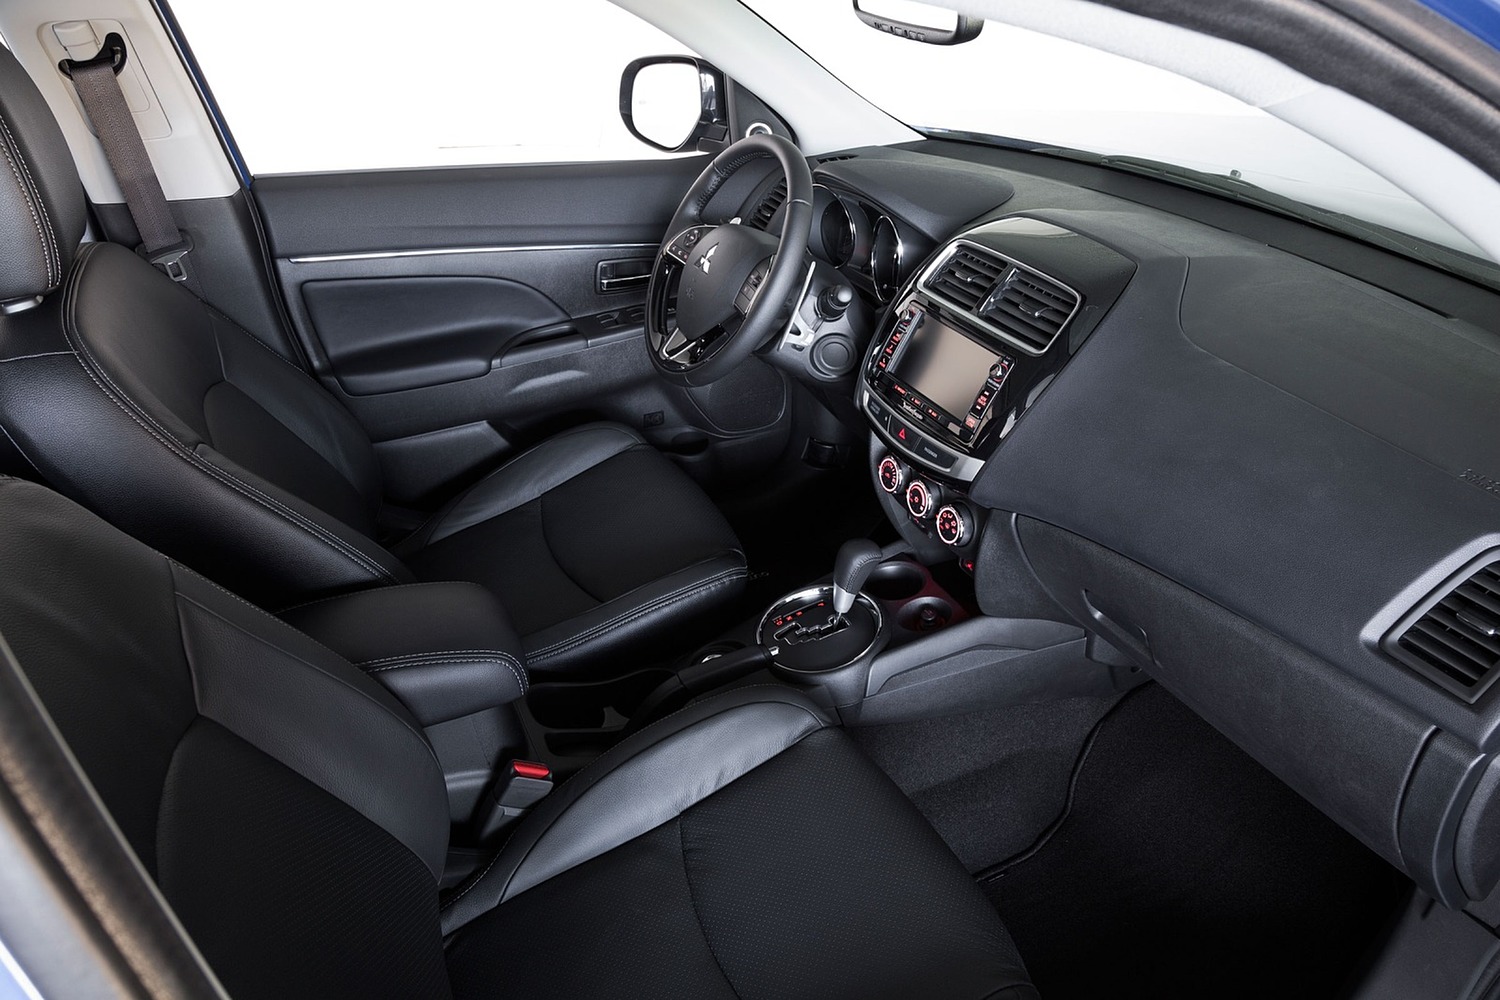 Mitsubishi Outlander Sport 2.4 GT 4dr SUV Interior (2016 model year shown)